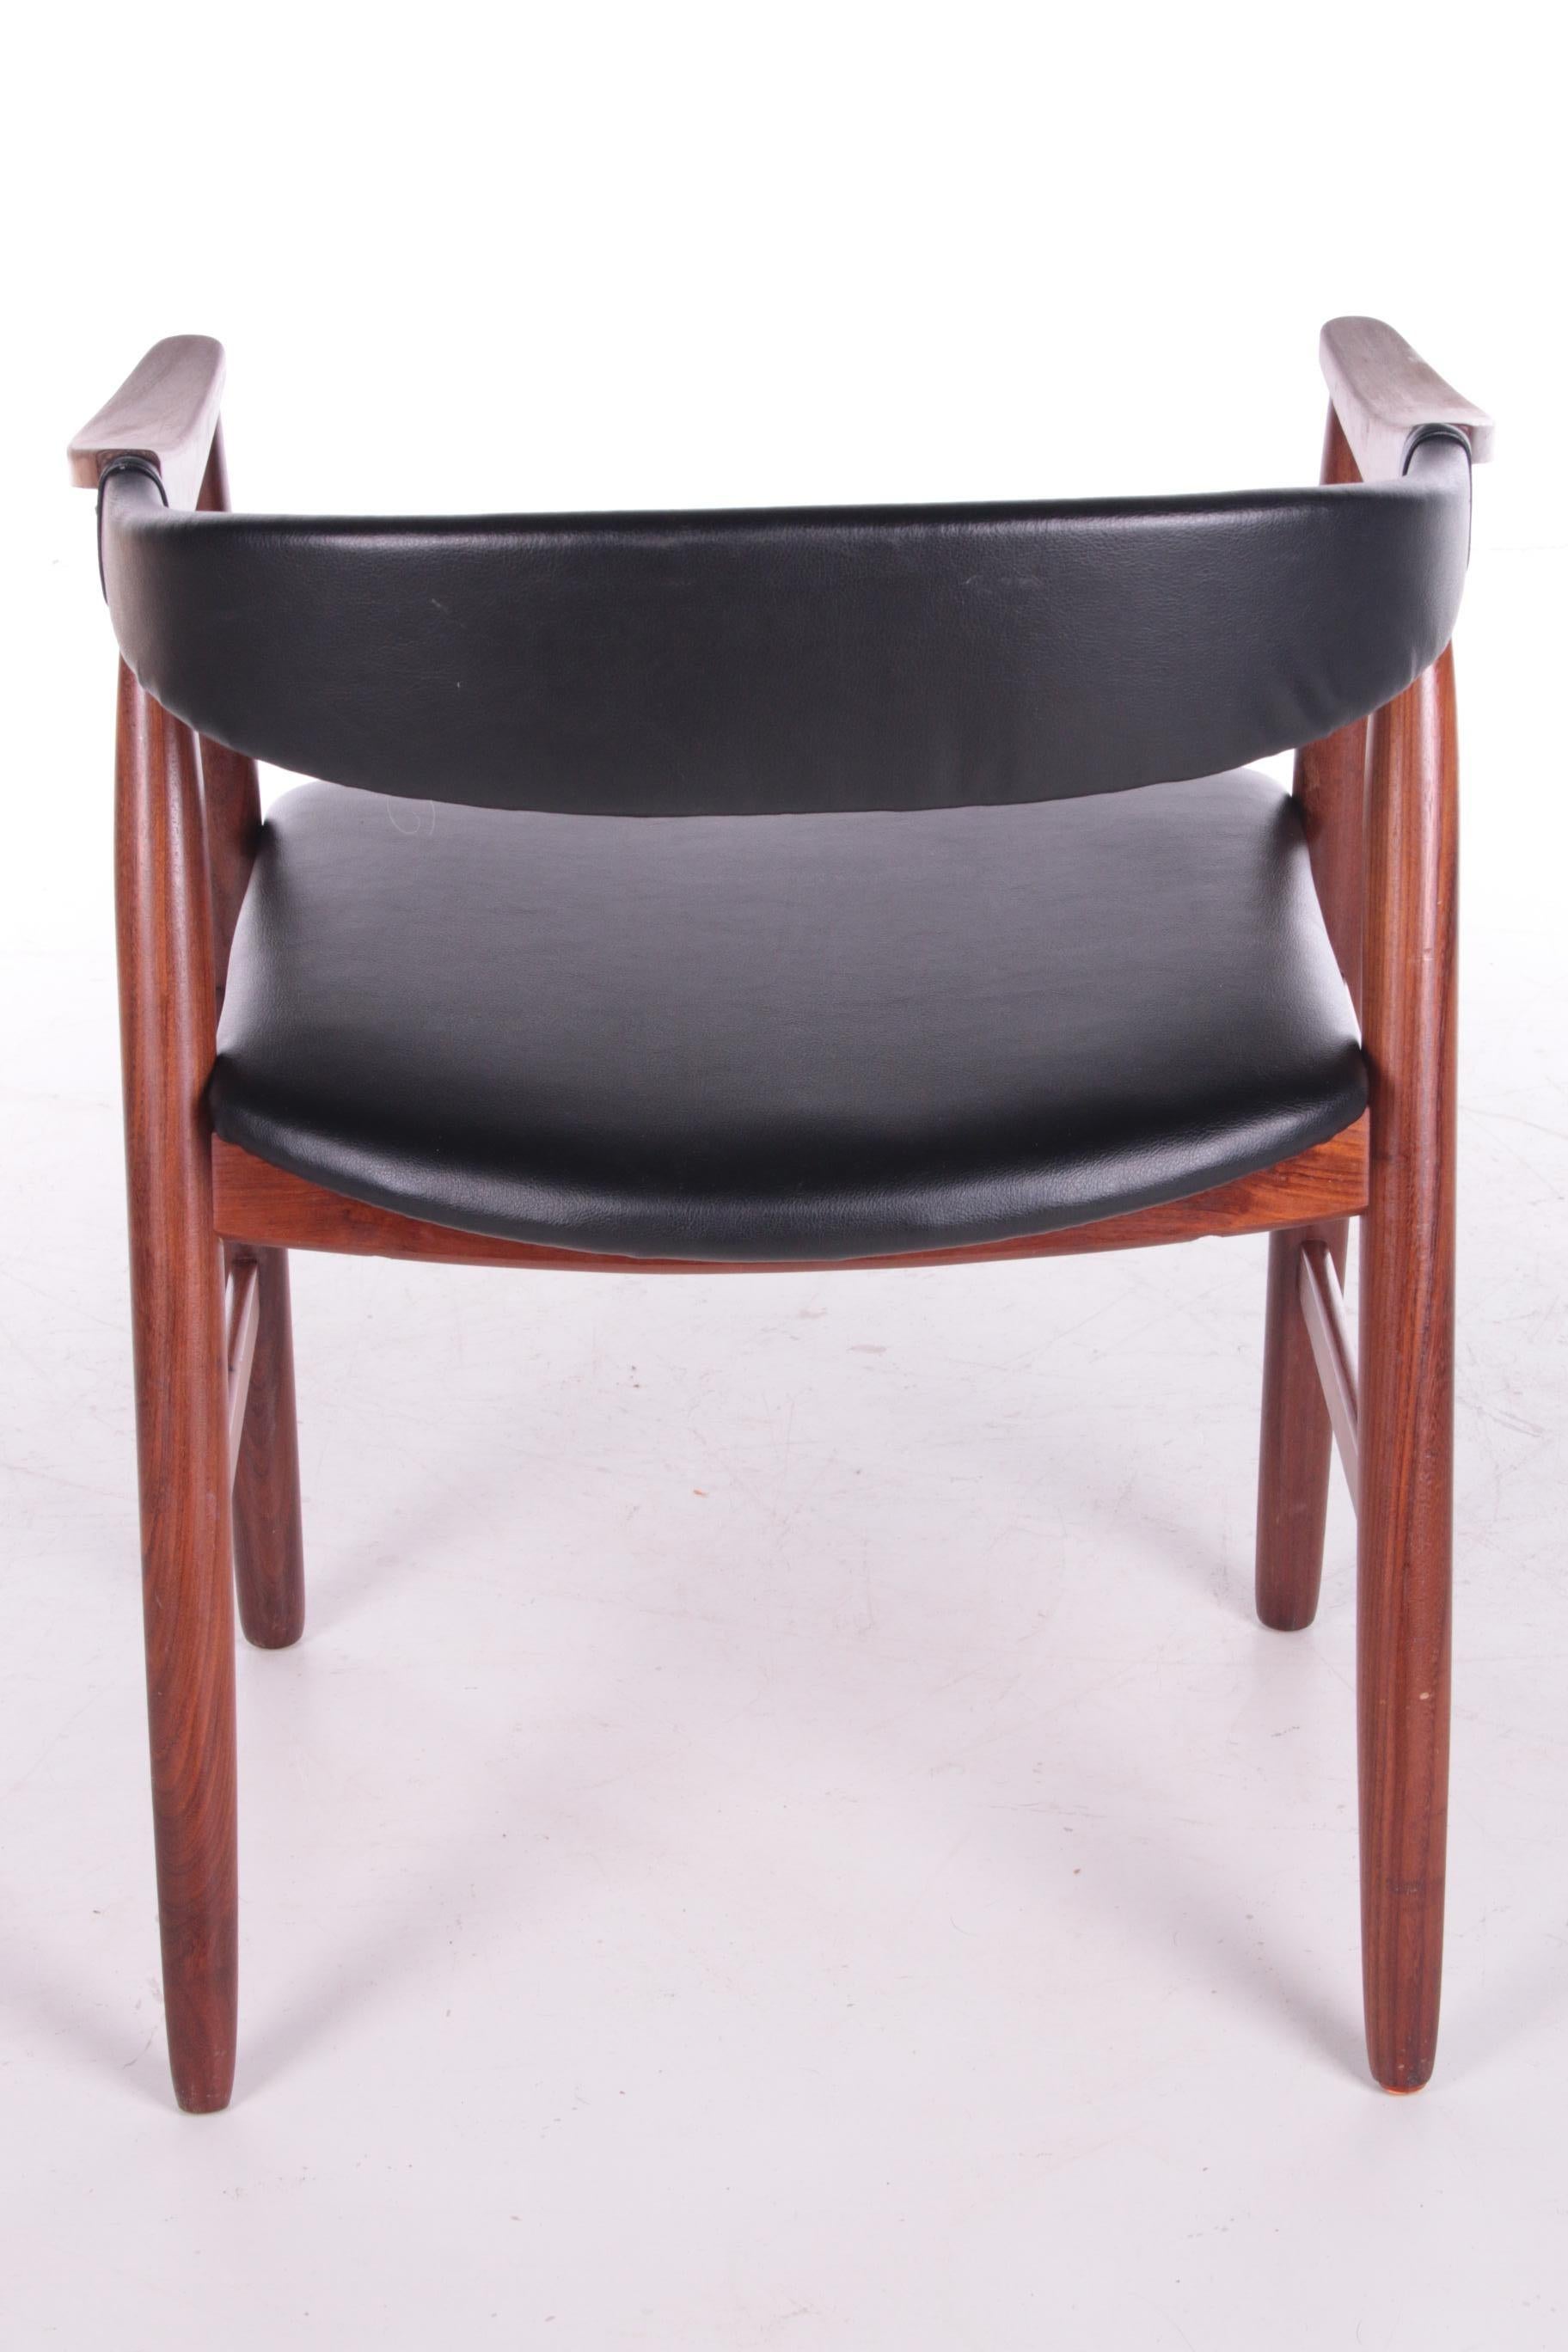 Mid-20th Century Vintage Danish Design Office Chair from Farstrup, Denmark 1960